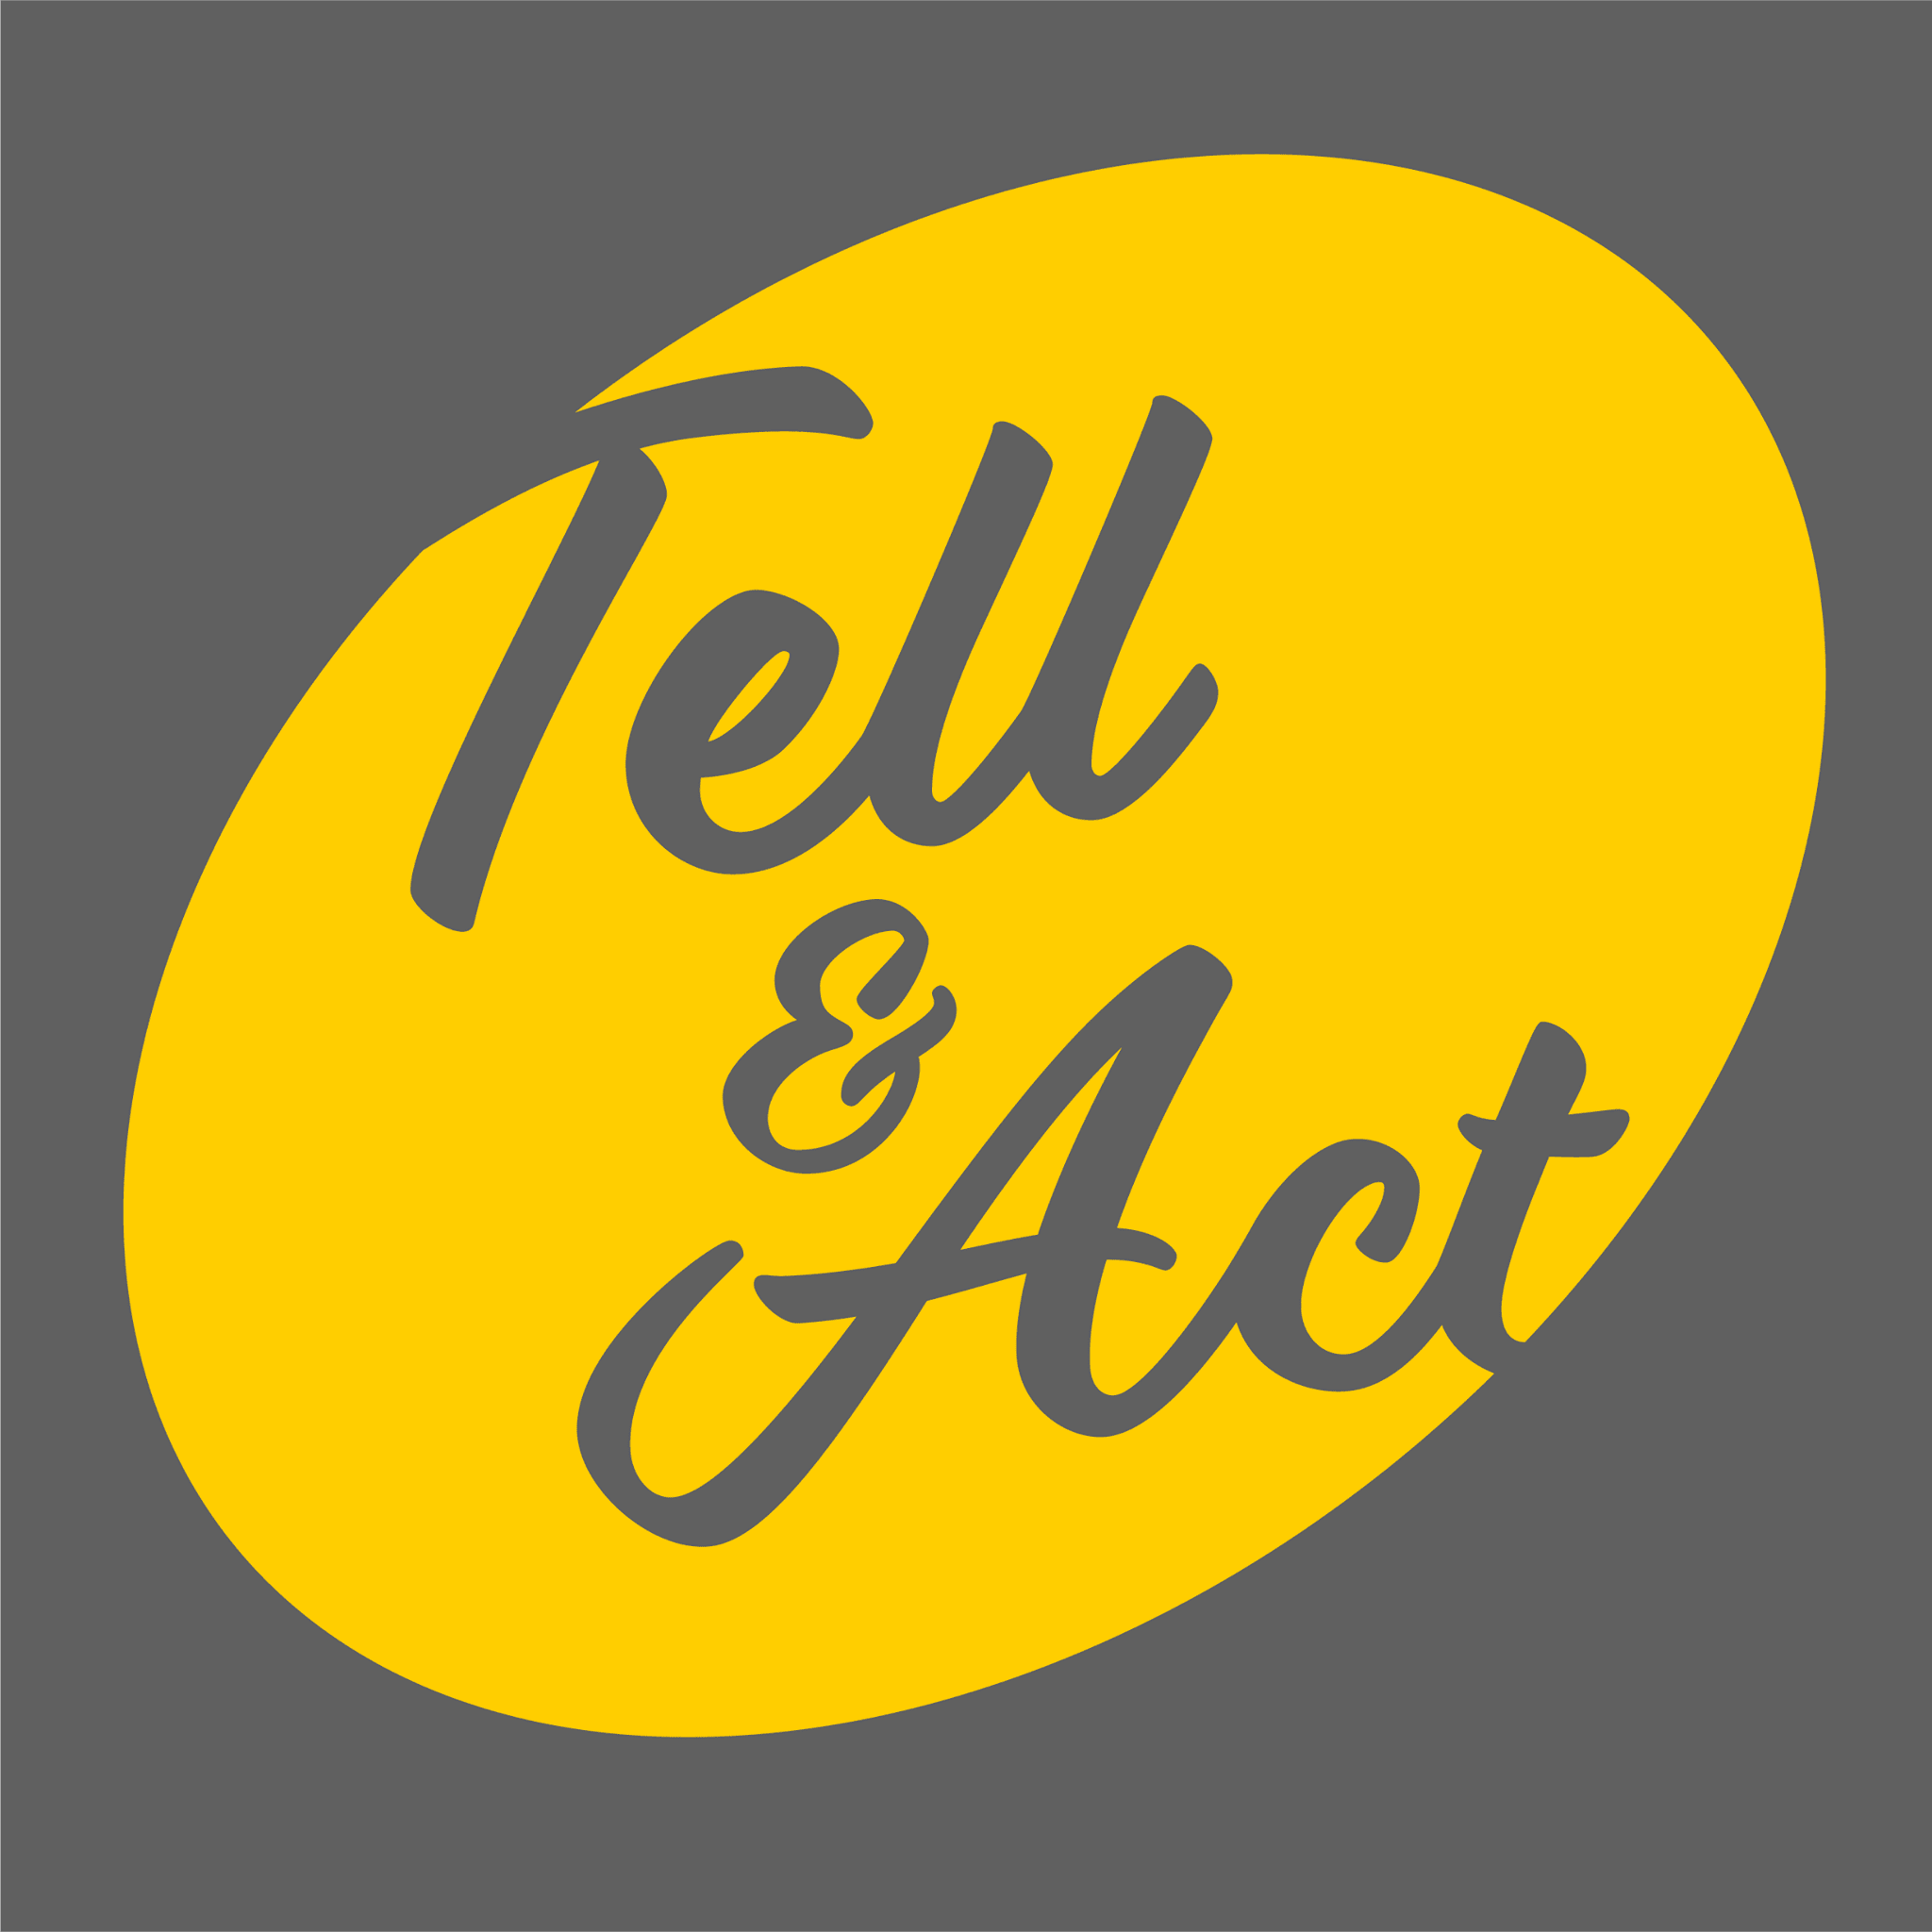 Tell&Act